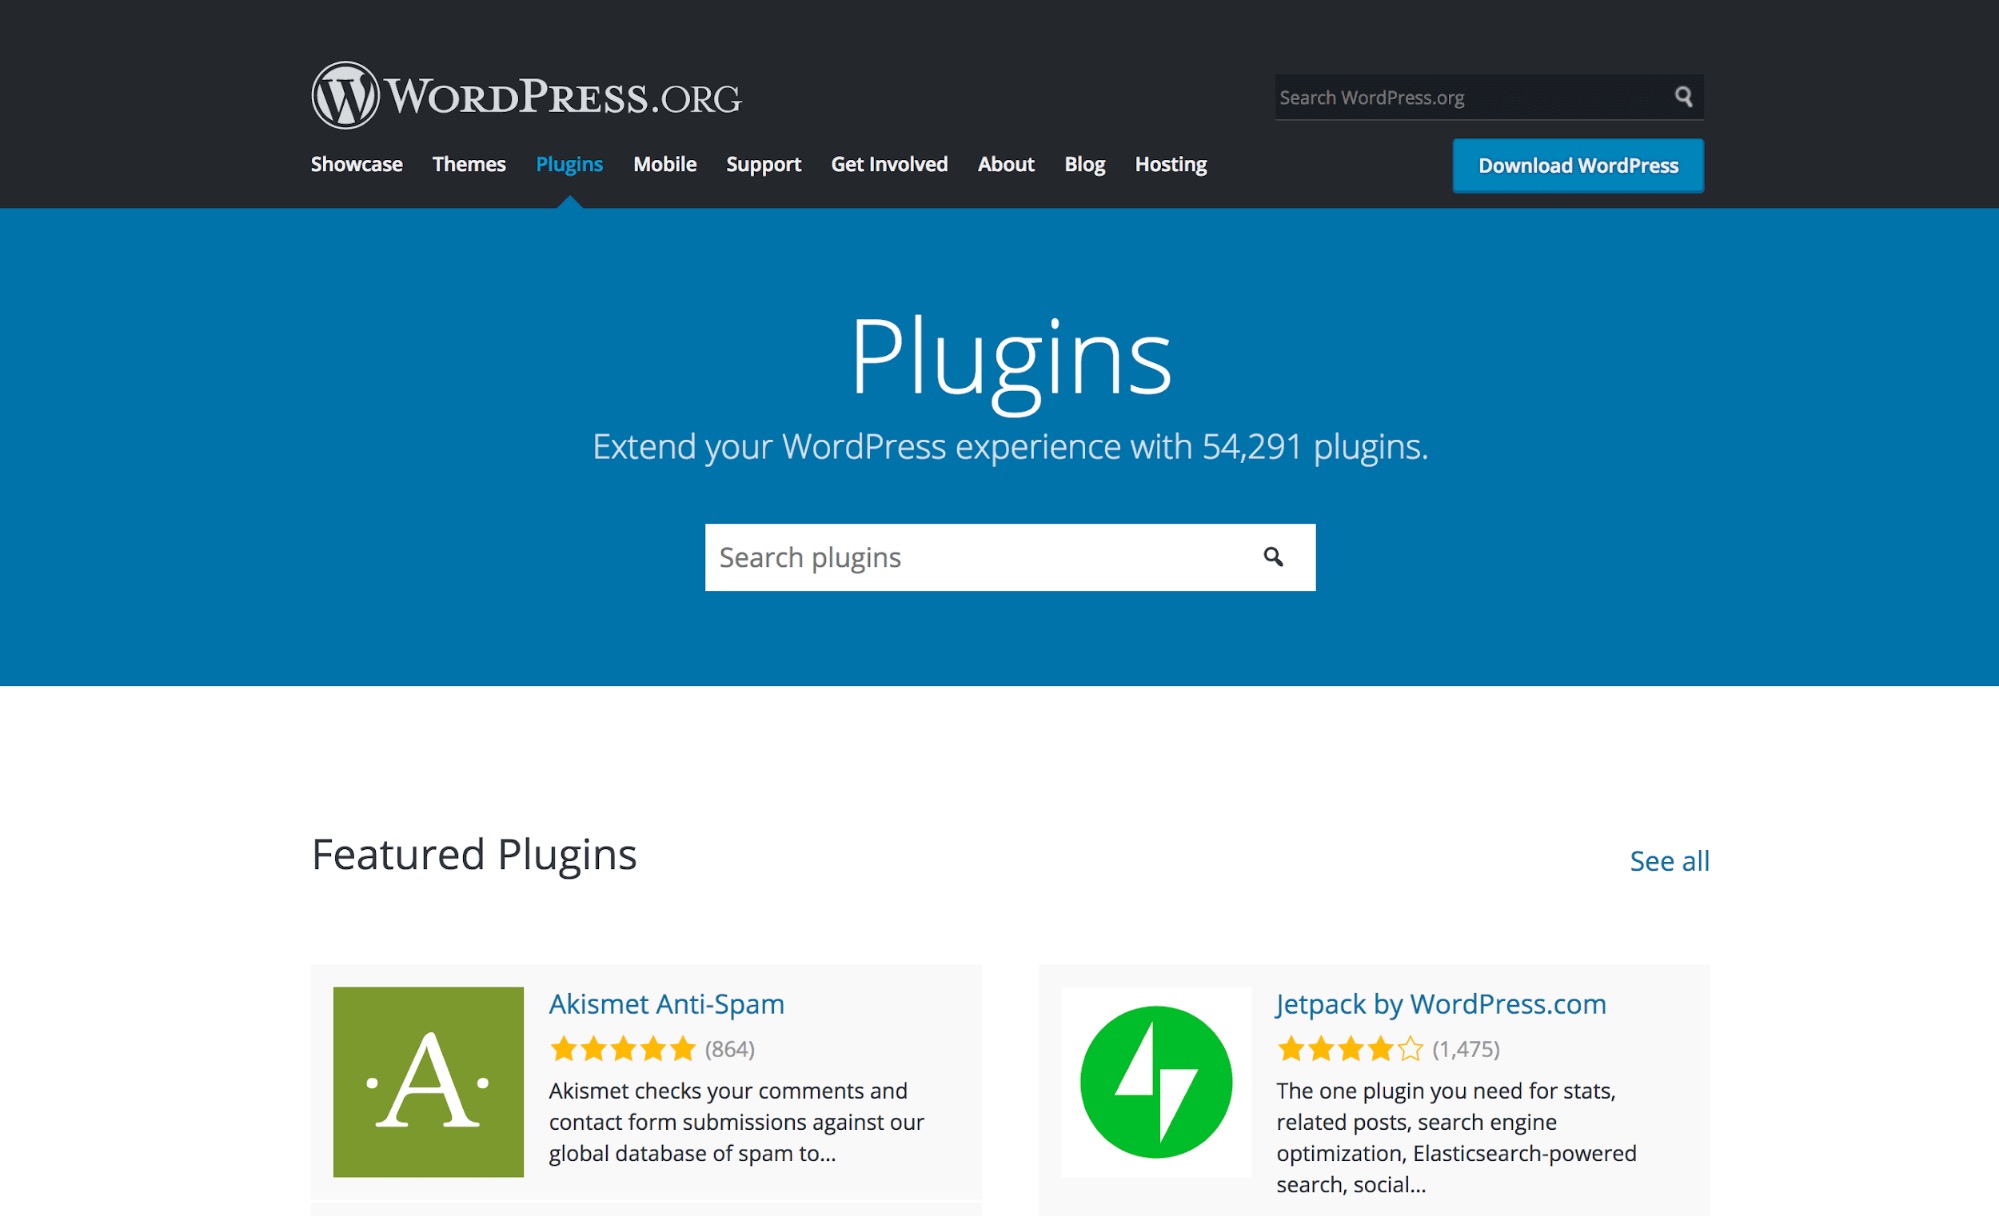 WordPress.org Plugins Page